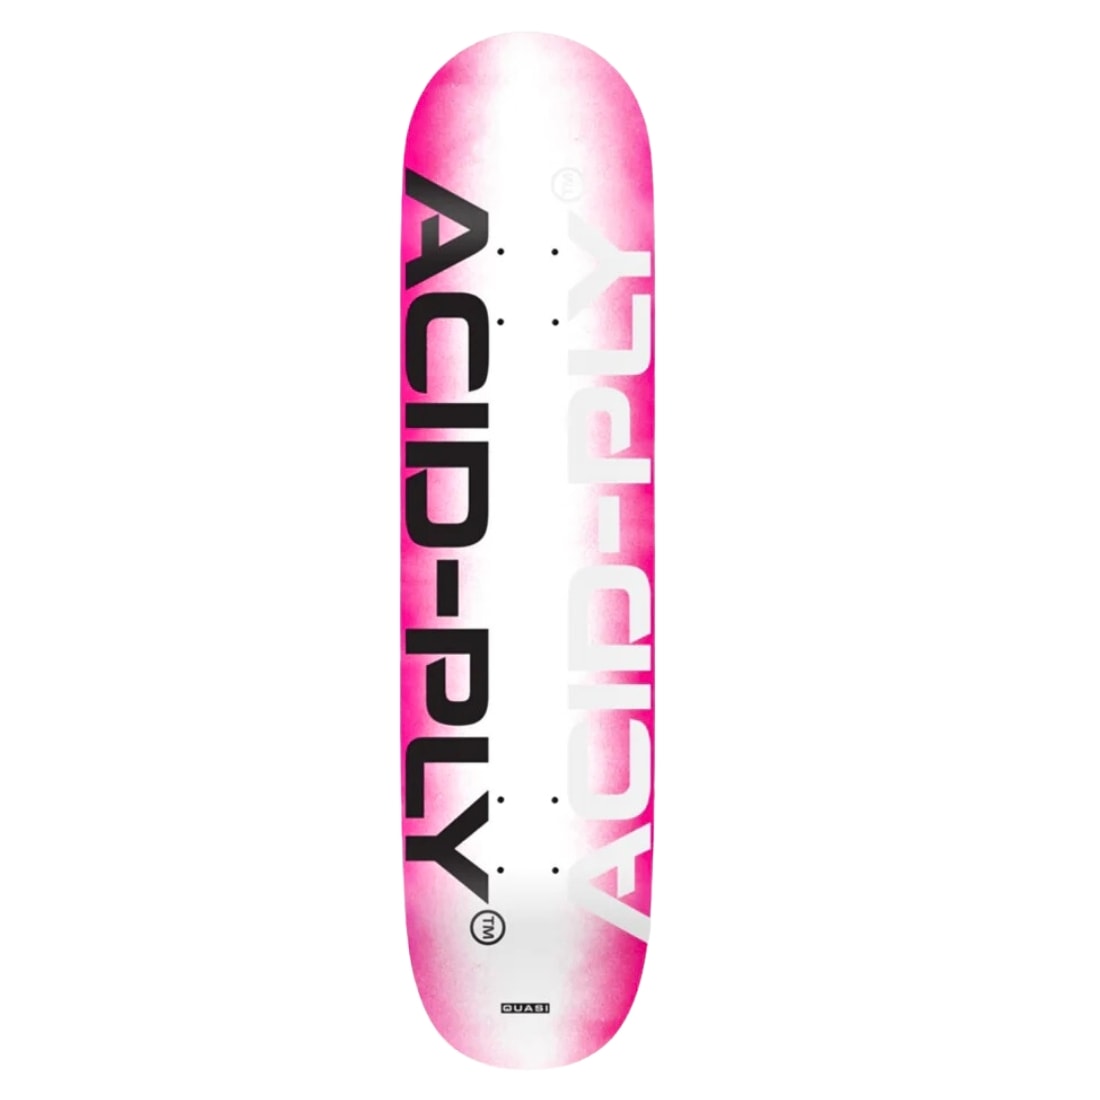 Quasi 8.5" Technology Two Deck - Pink - Skateboard Deck by Quasi 8.5 inch